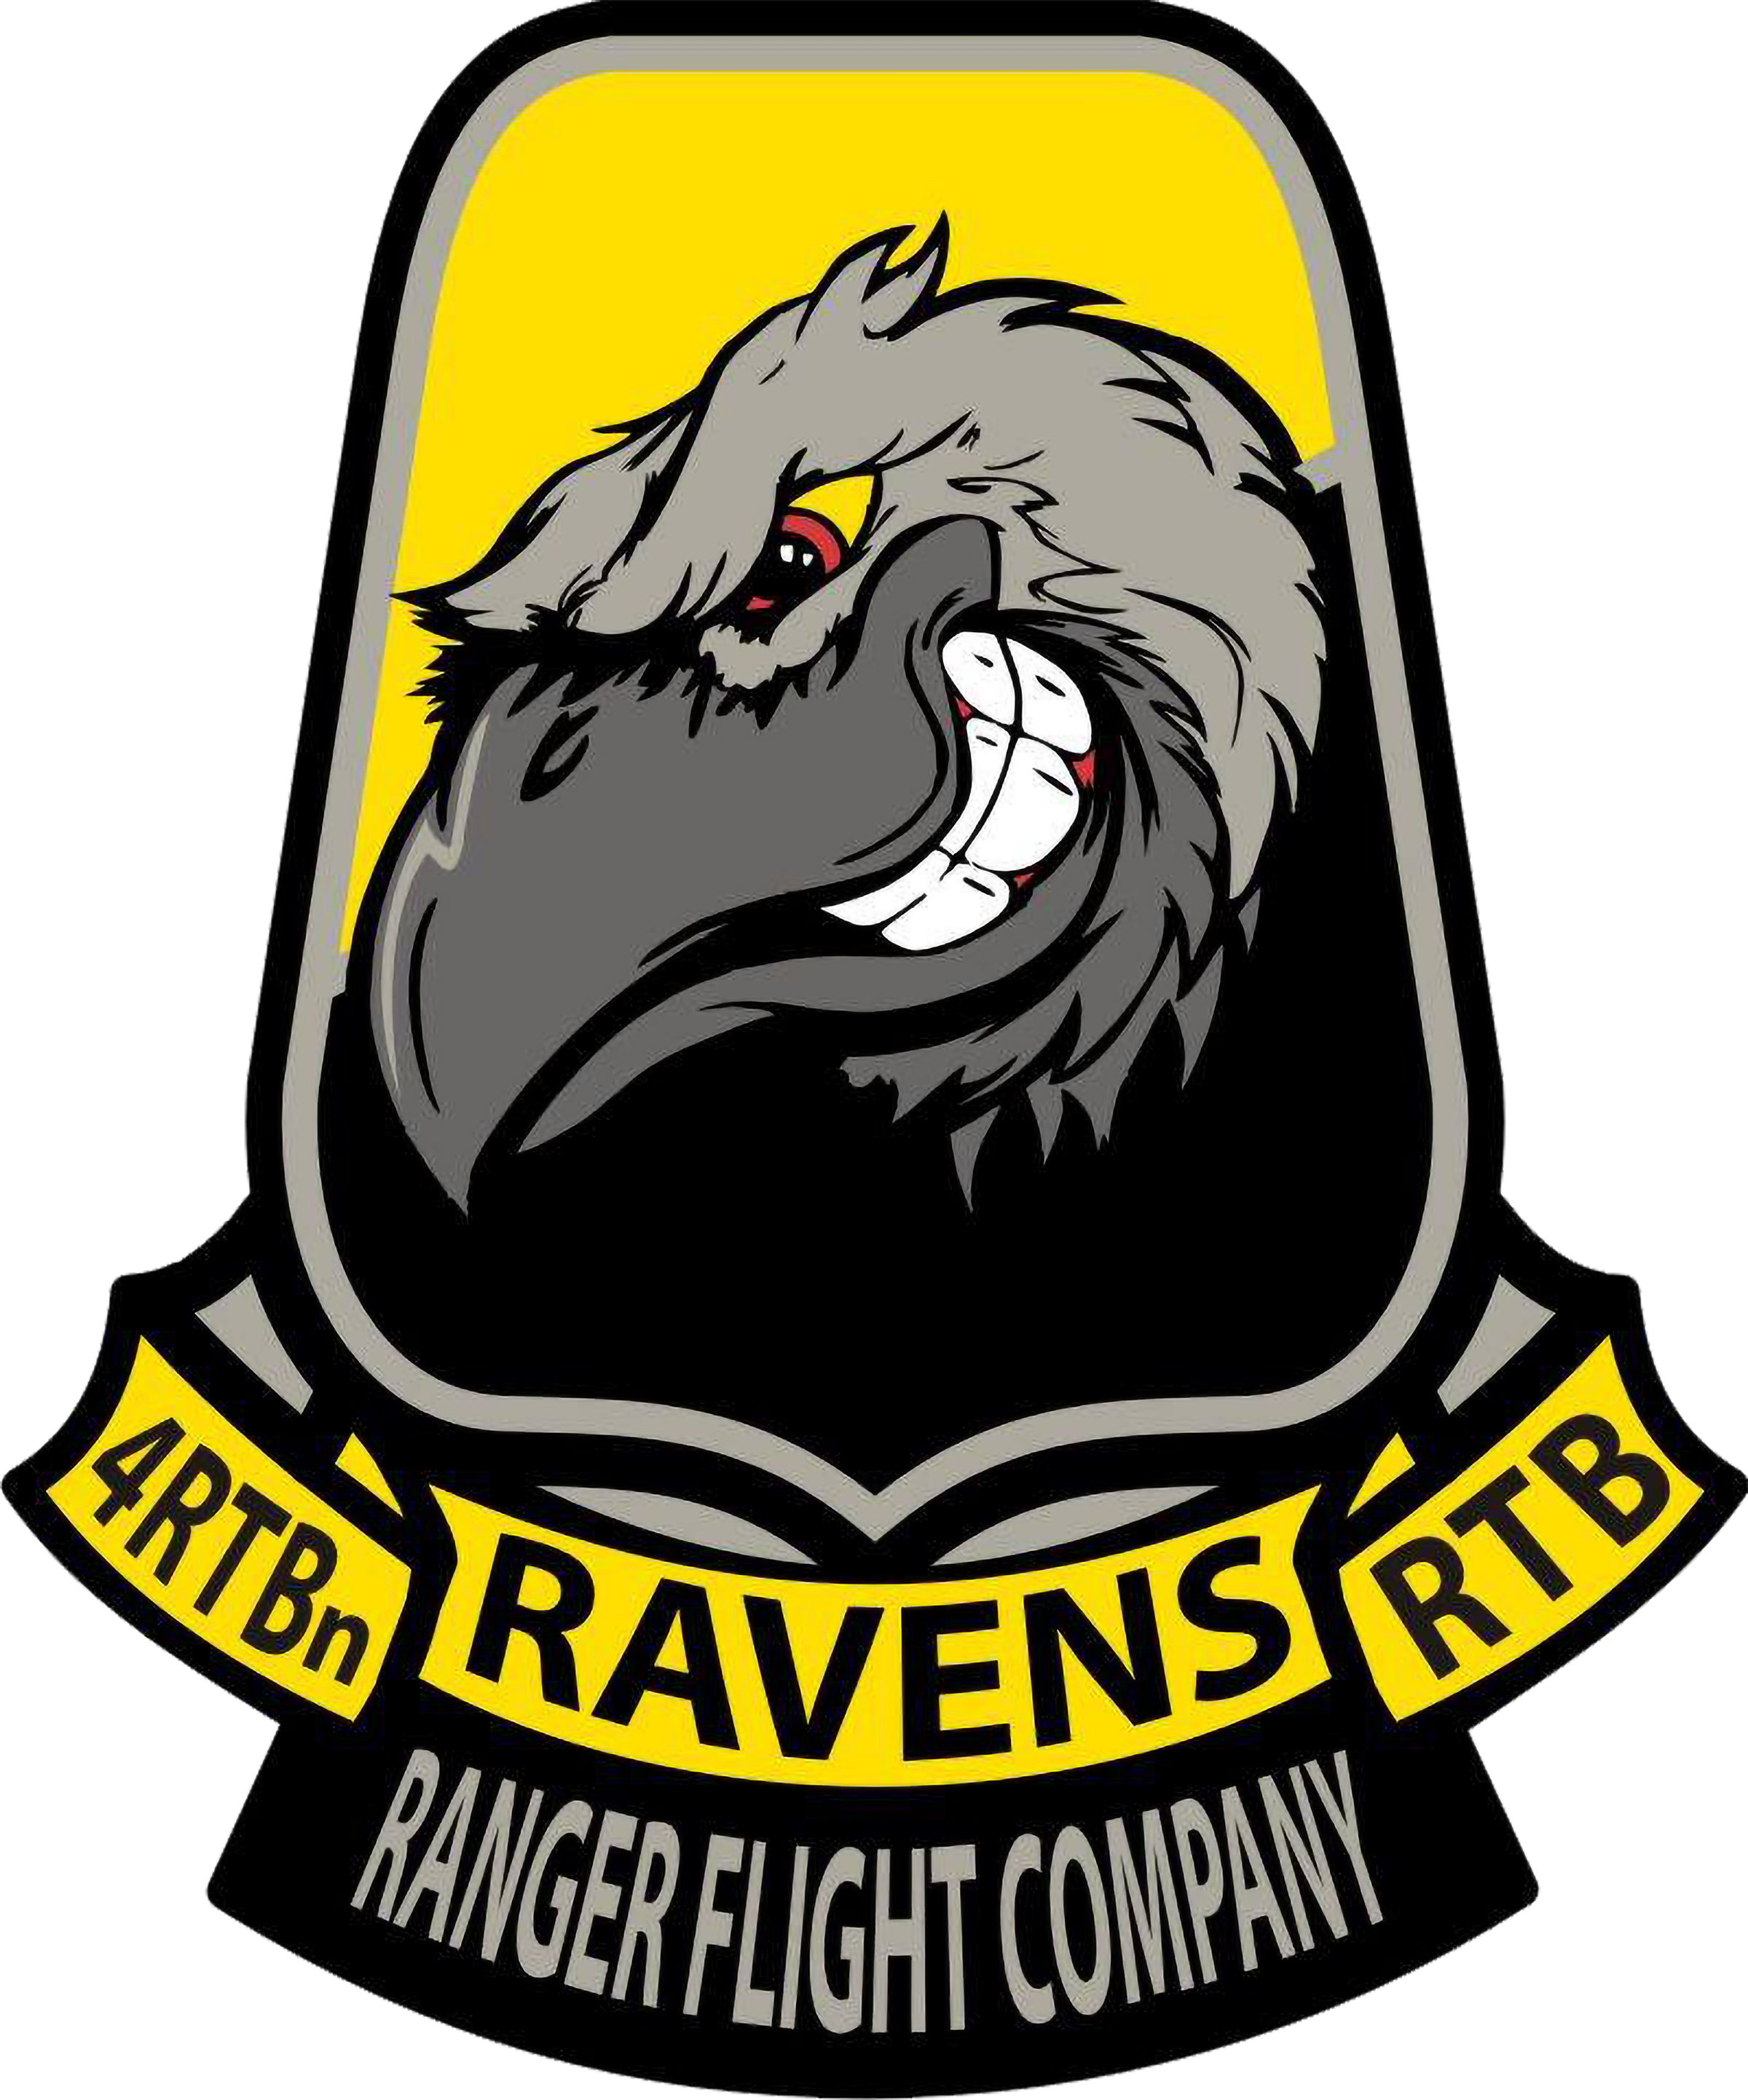 4th RTB, Ranger Flight Company "Ravens"